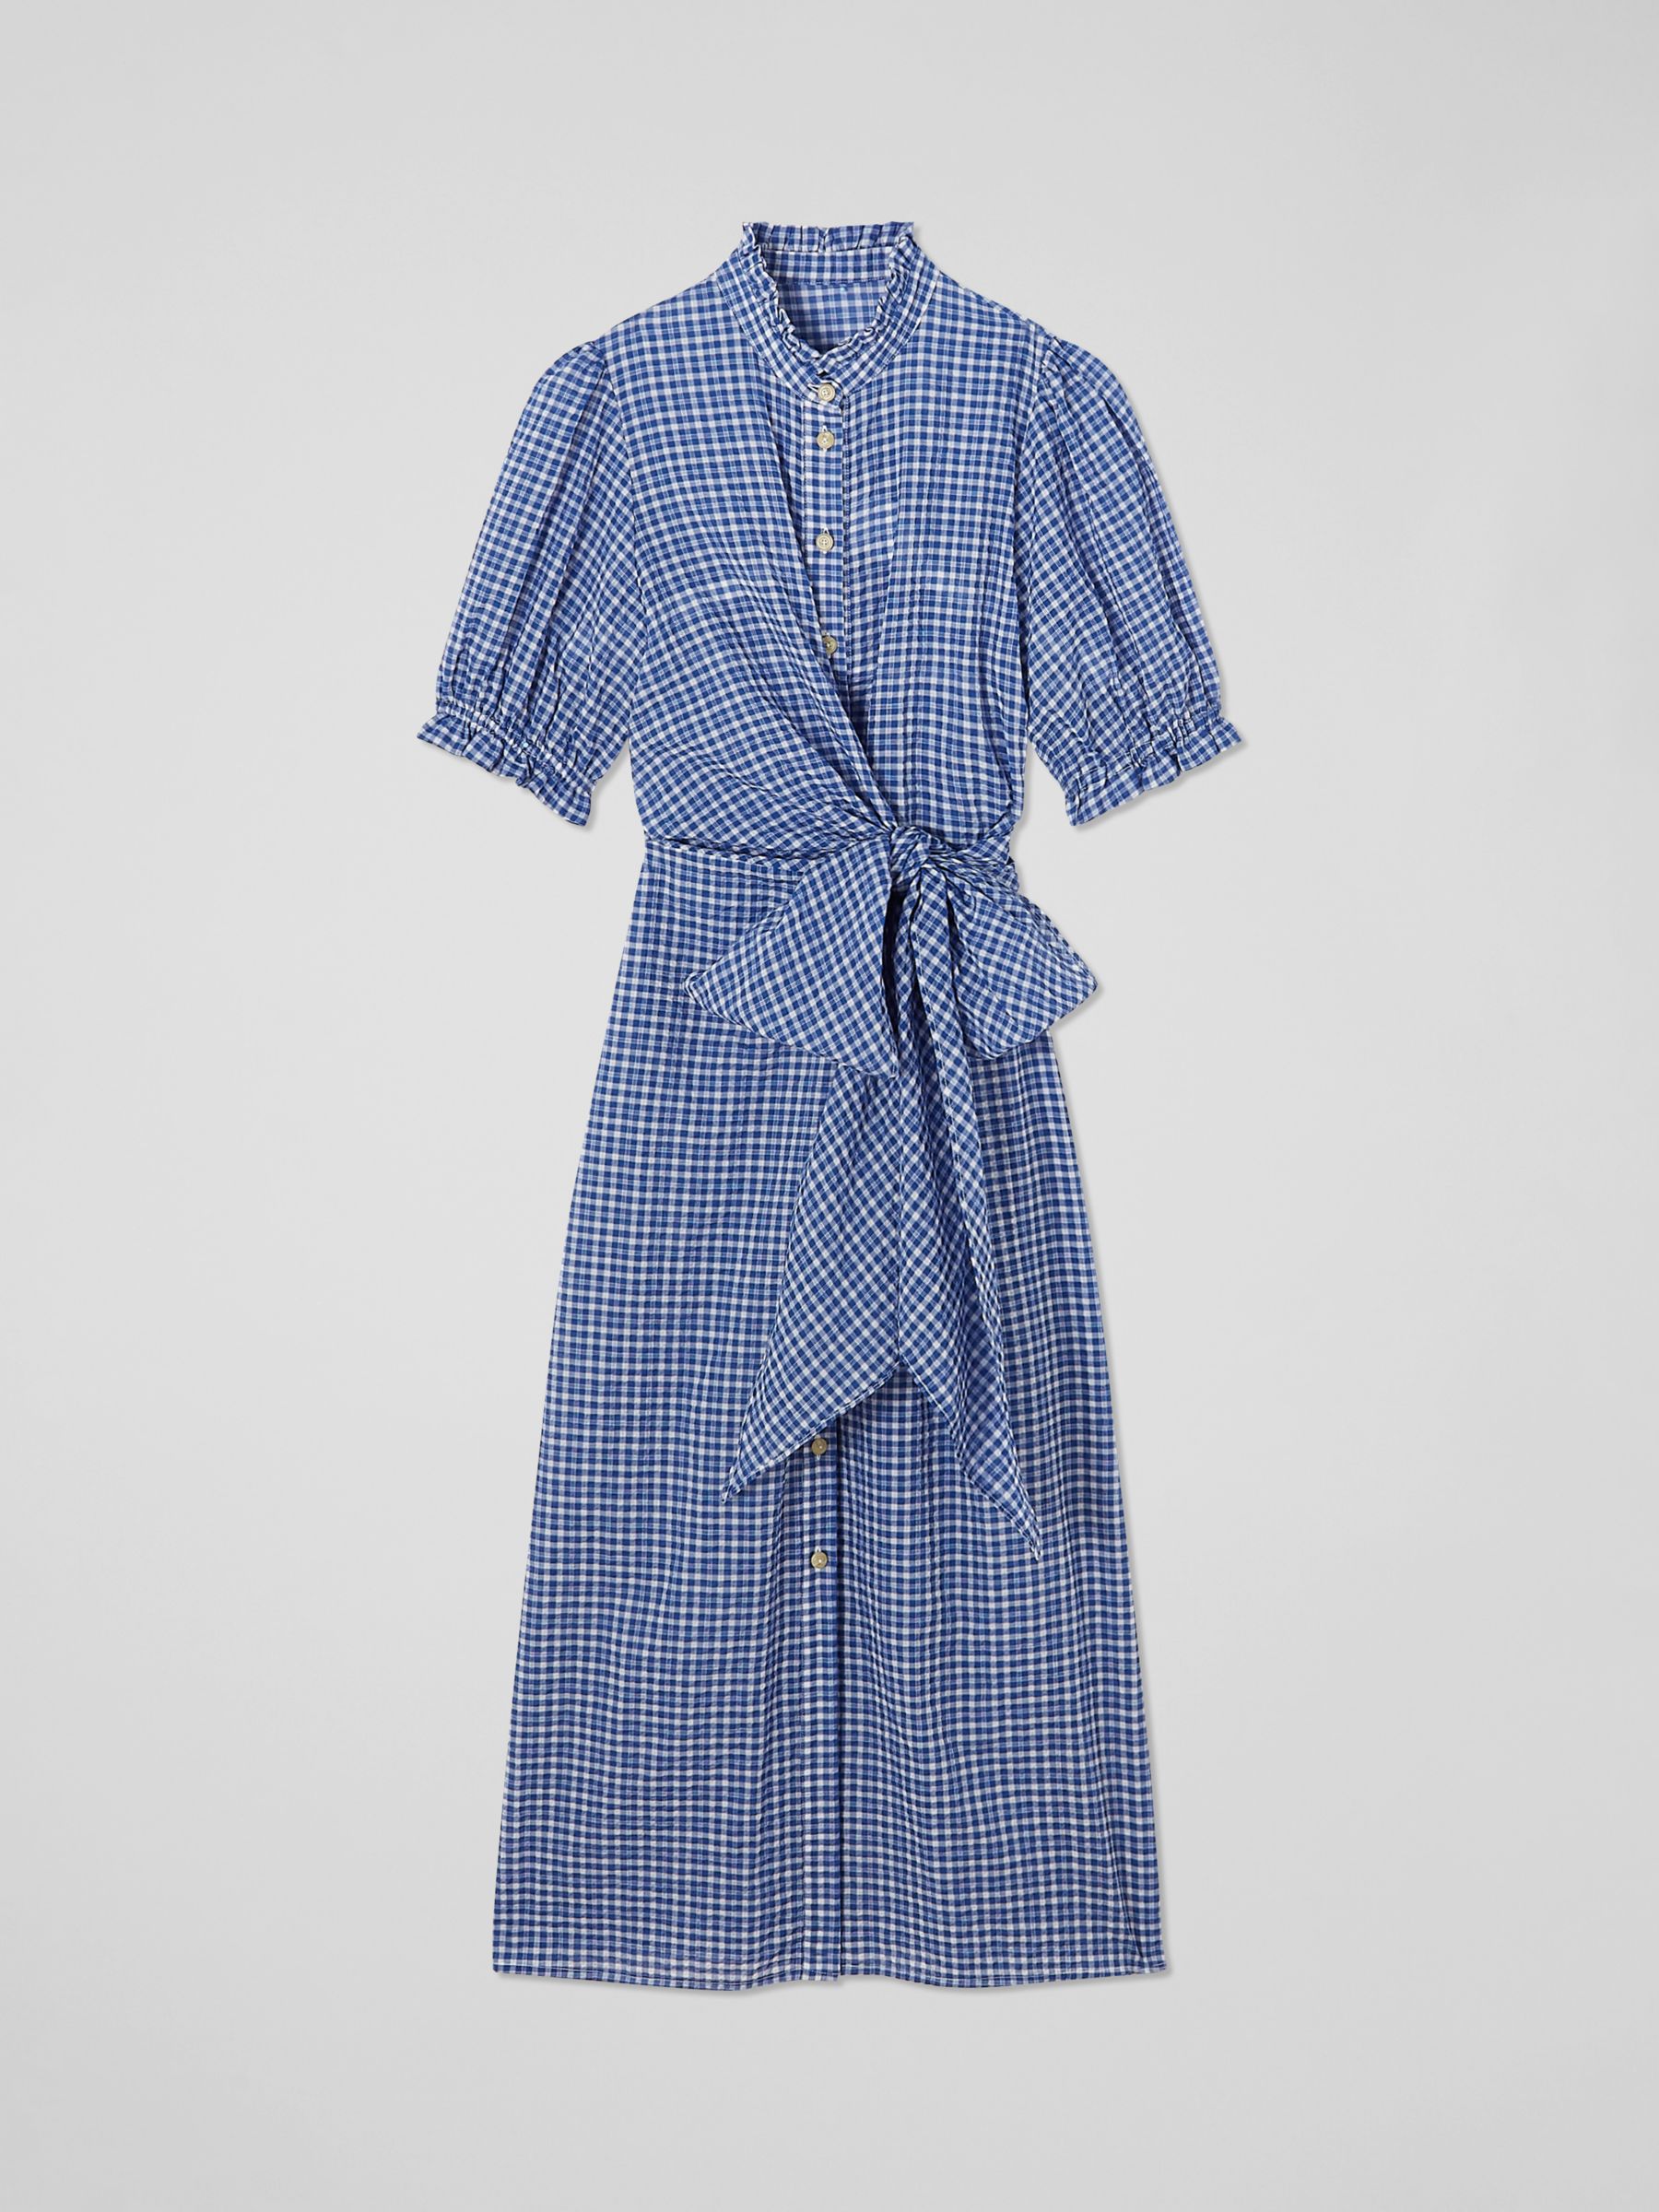 L.K.Bennett Soleil Seersucker Check Midi Shirt Dress, Blue/White, 20